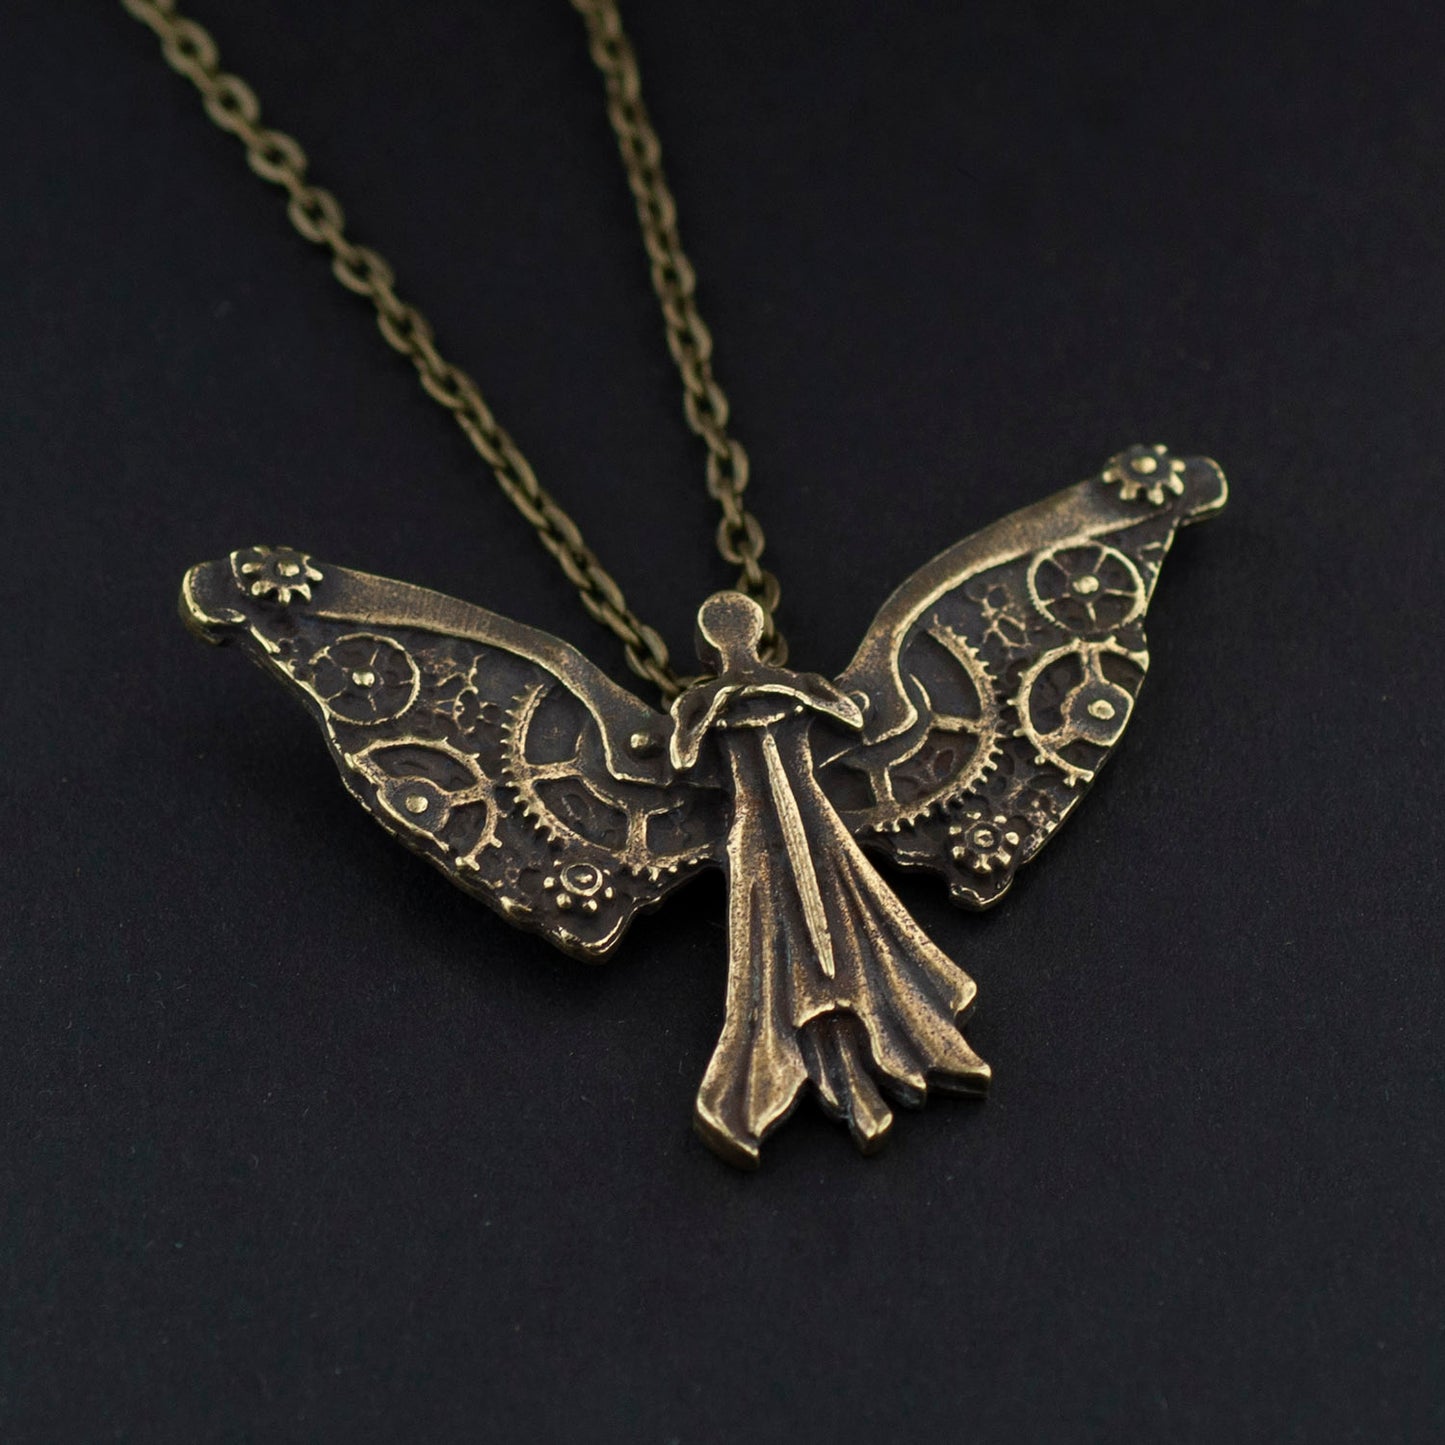 Tessa's Clockwork Angel Necklace replica